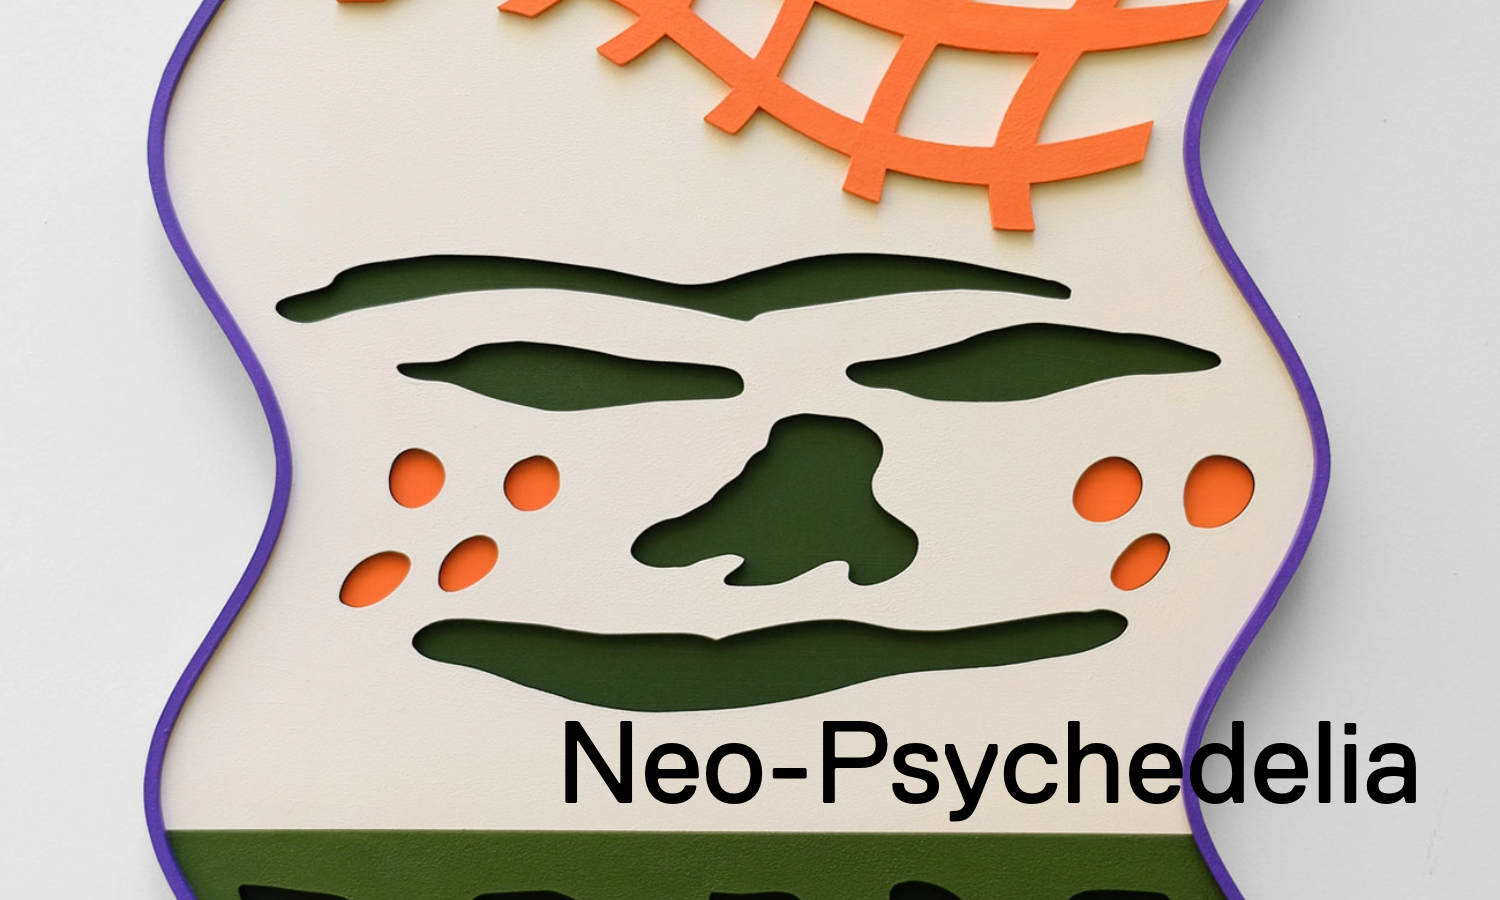 Neo Psychedelia